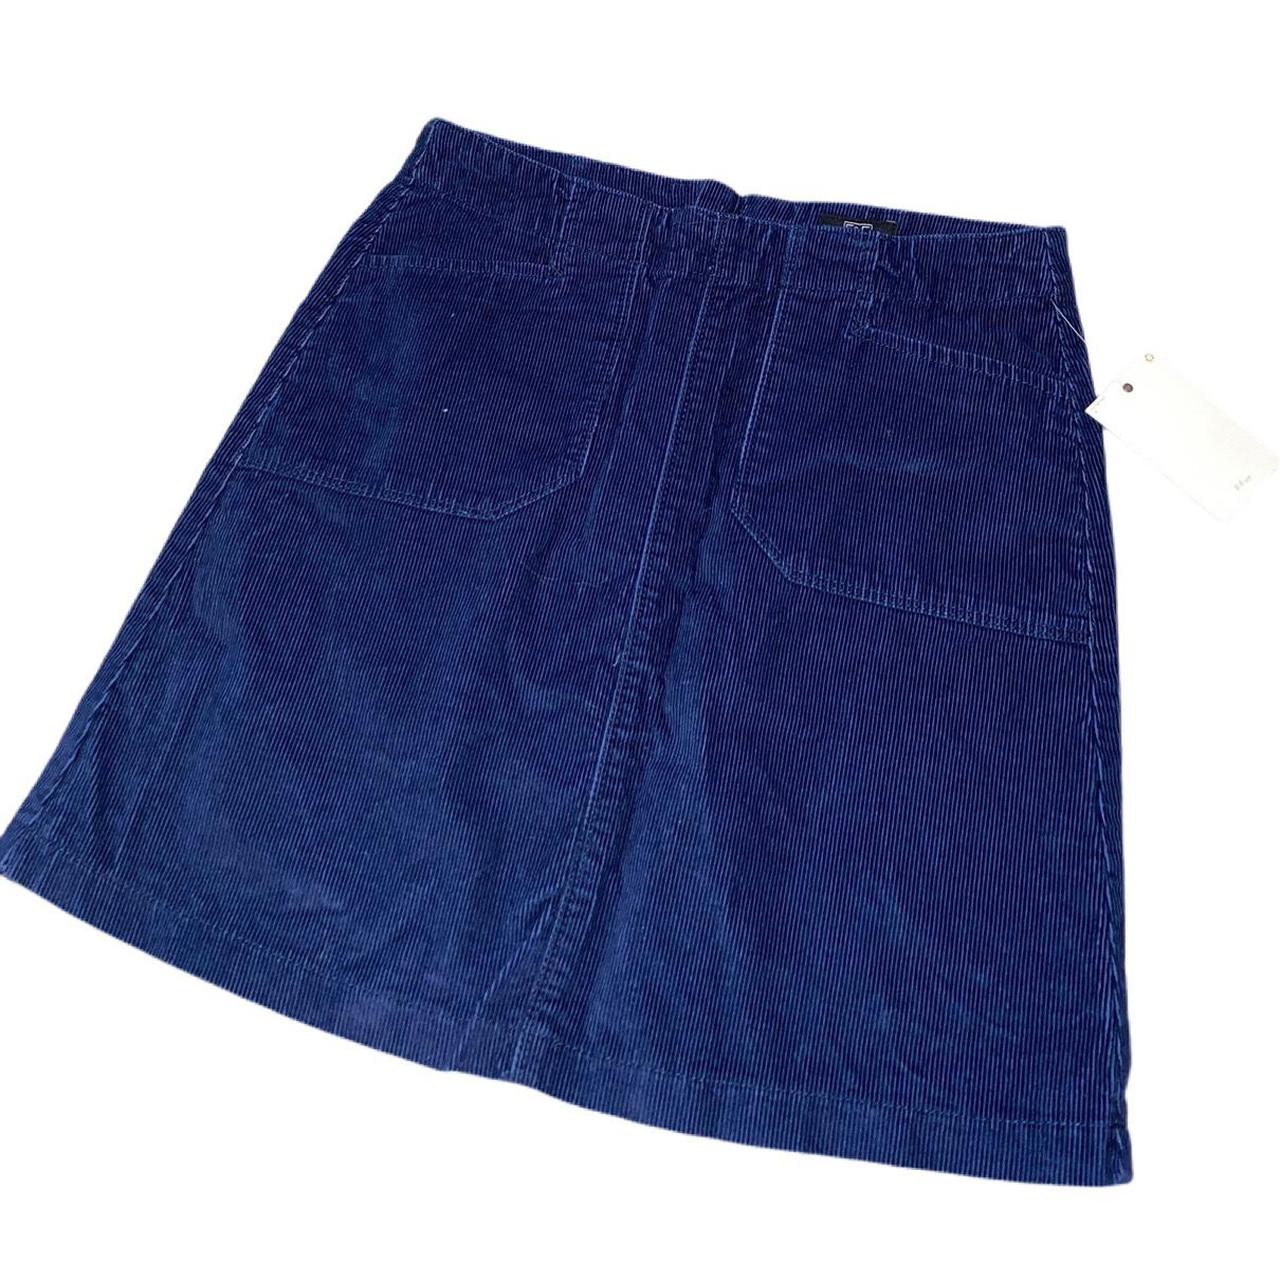 Product Image 1 - F&F. Short corduroy skirt. Pockets.